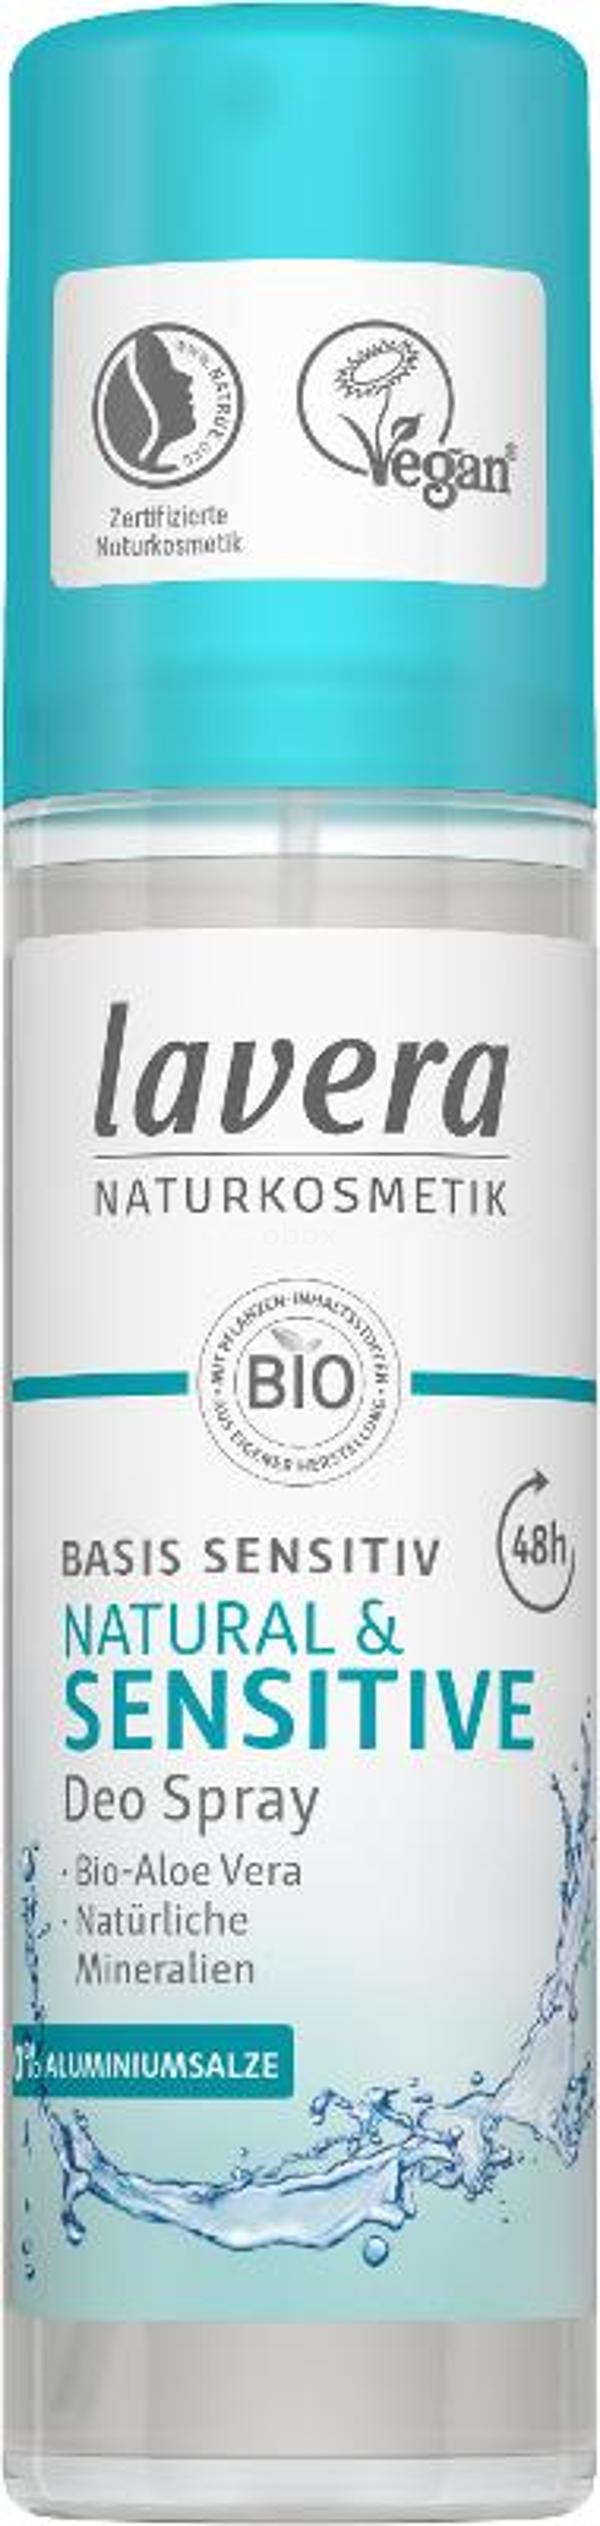 Produktfoto zu Lavera Deo Spray - basis sensitiv - 75ml